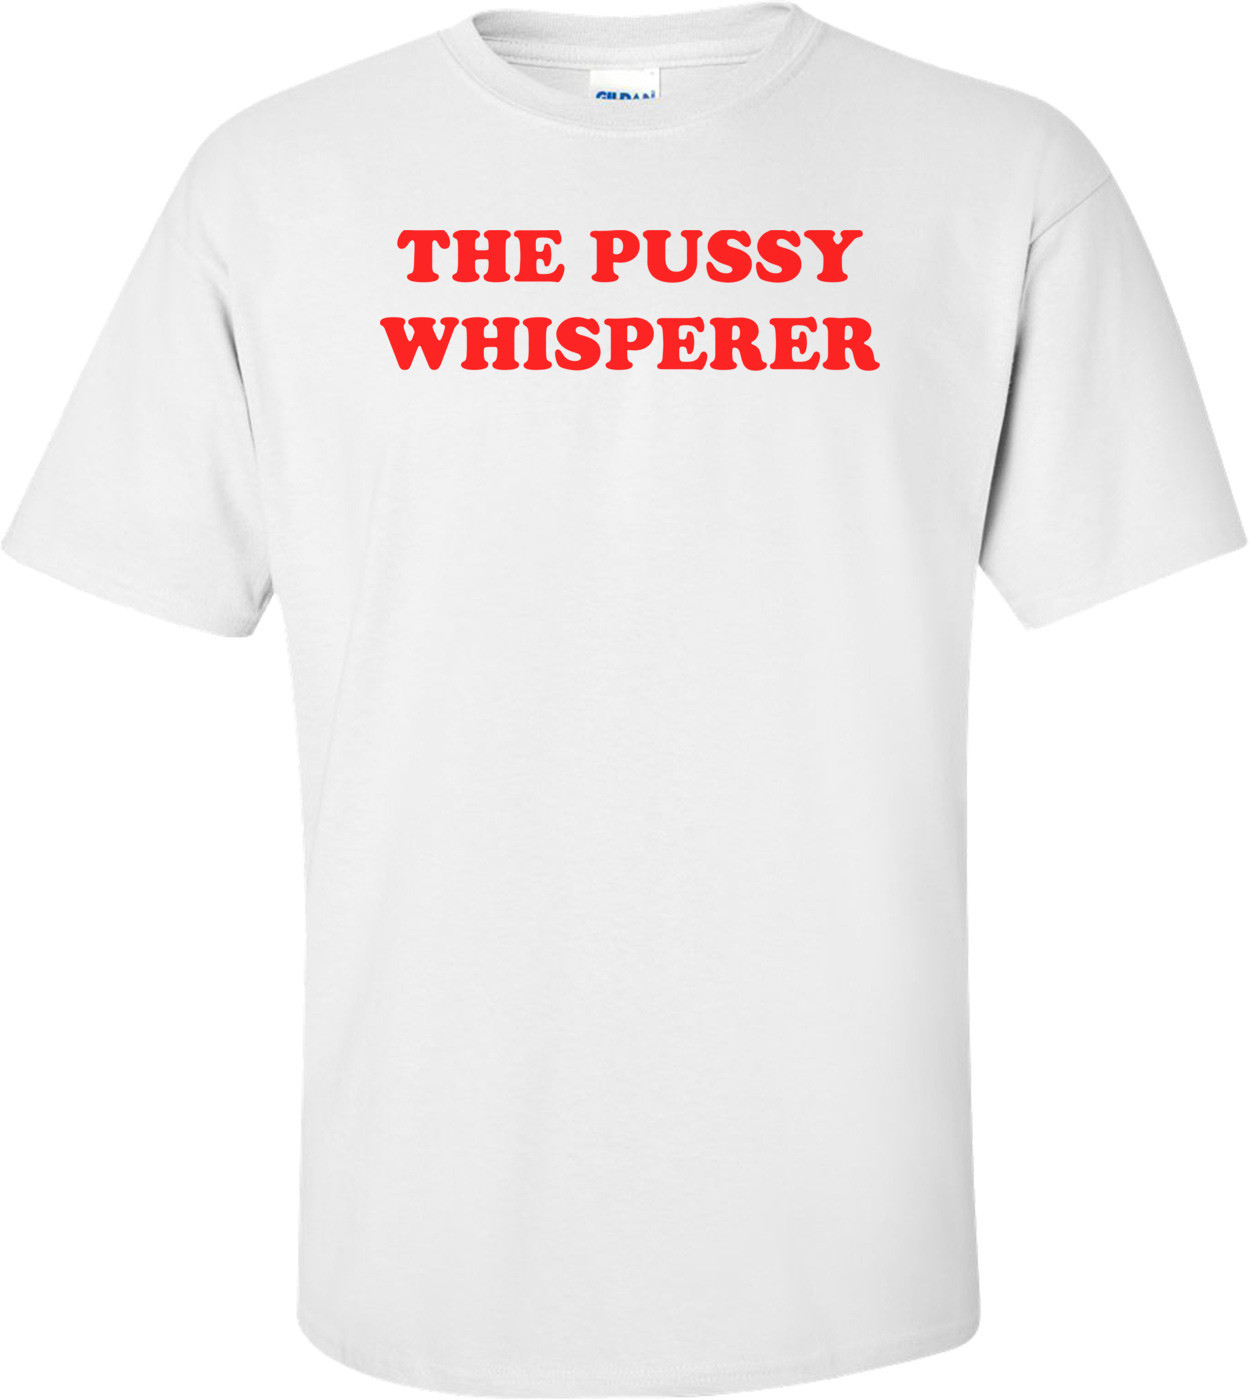 THE PUSSY WHISPERER Shirt